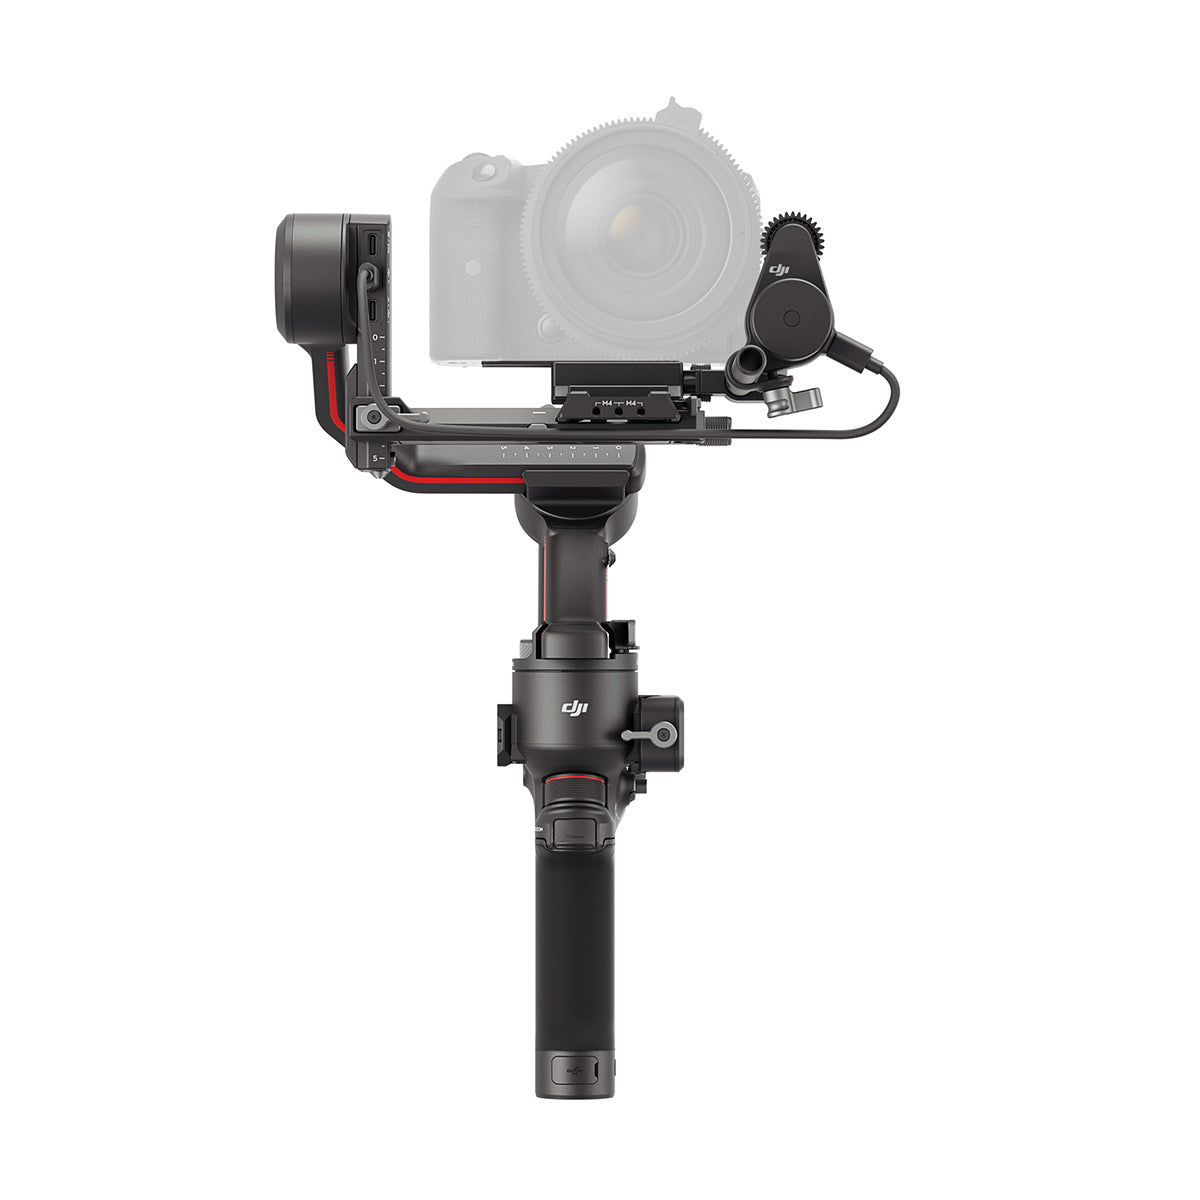 DJI RS 3 Camera Stabilizer Combo